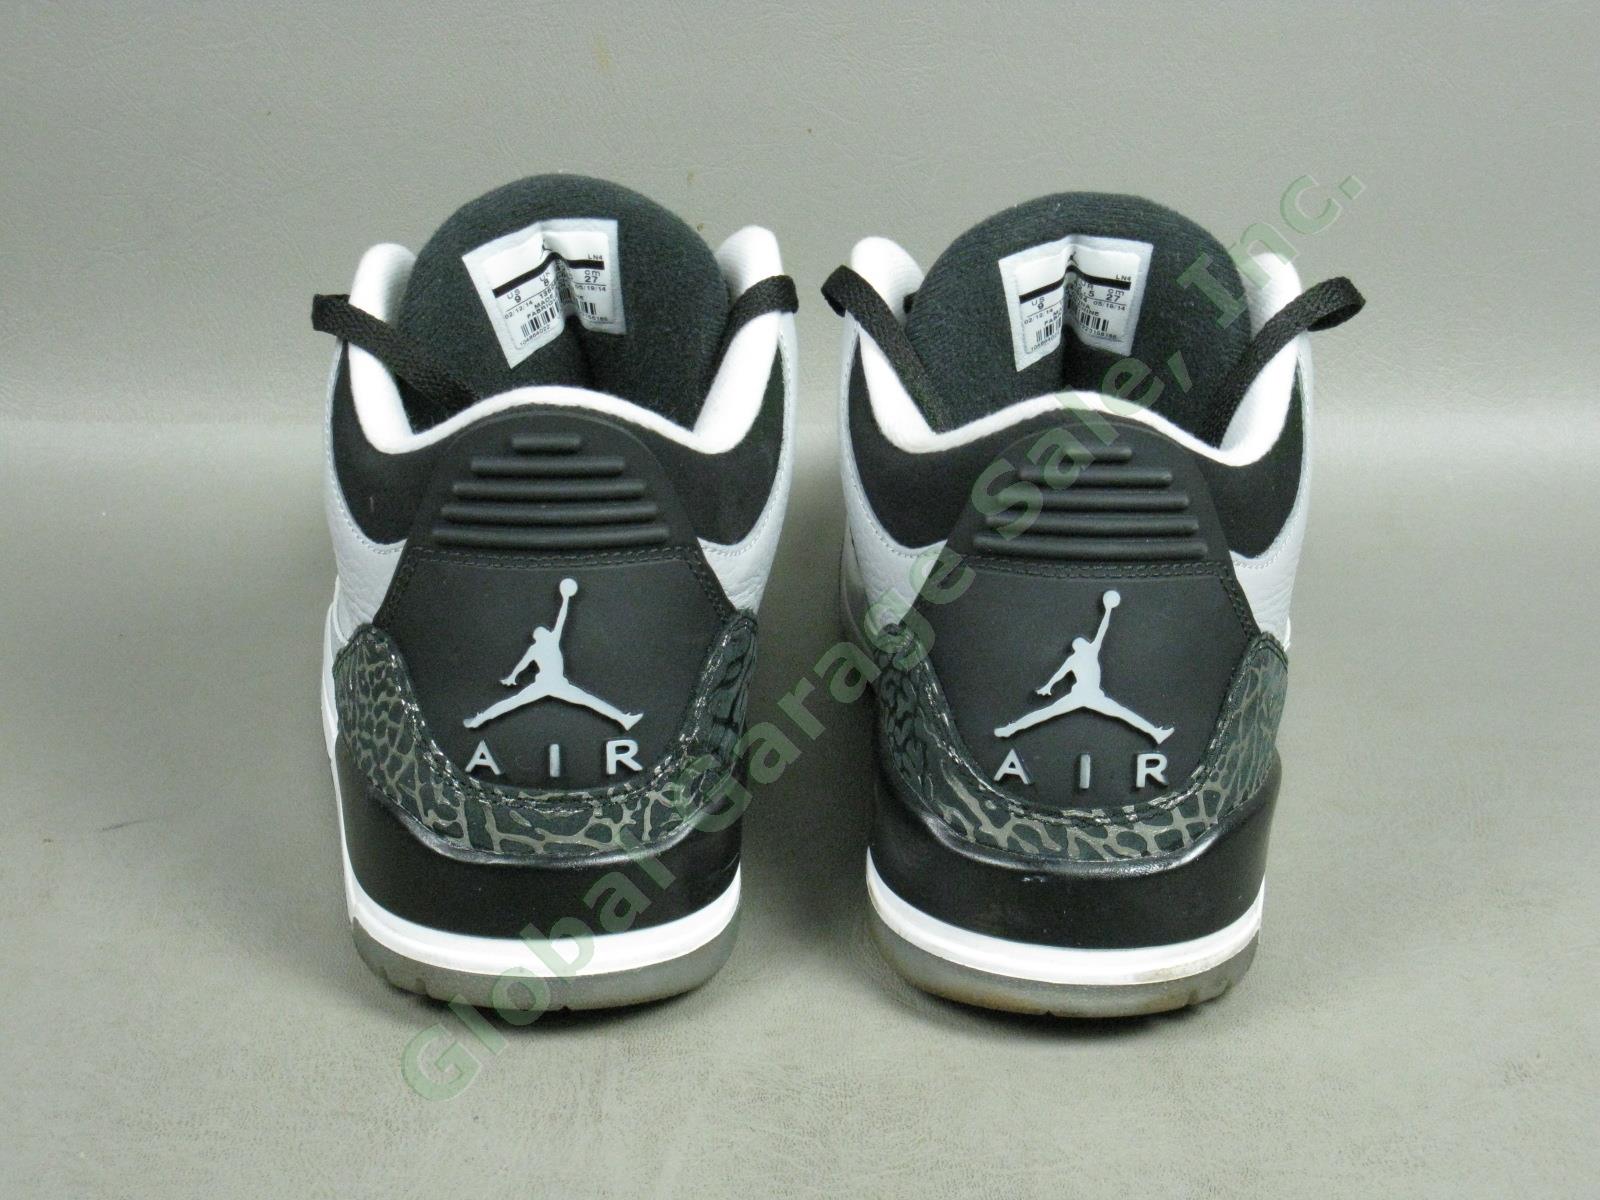 Nike Air Jordan 3 Retro Wolf Grey Basketball Shoes Size US 9 EUR 42.5 136064-004 2